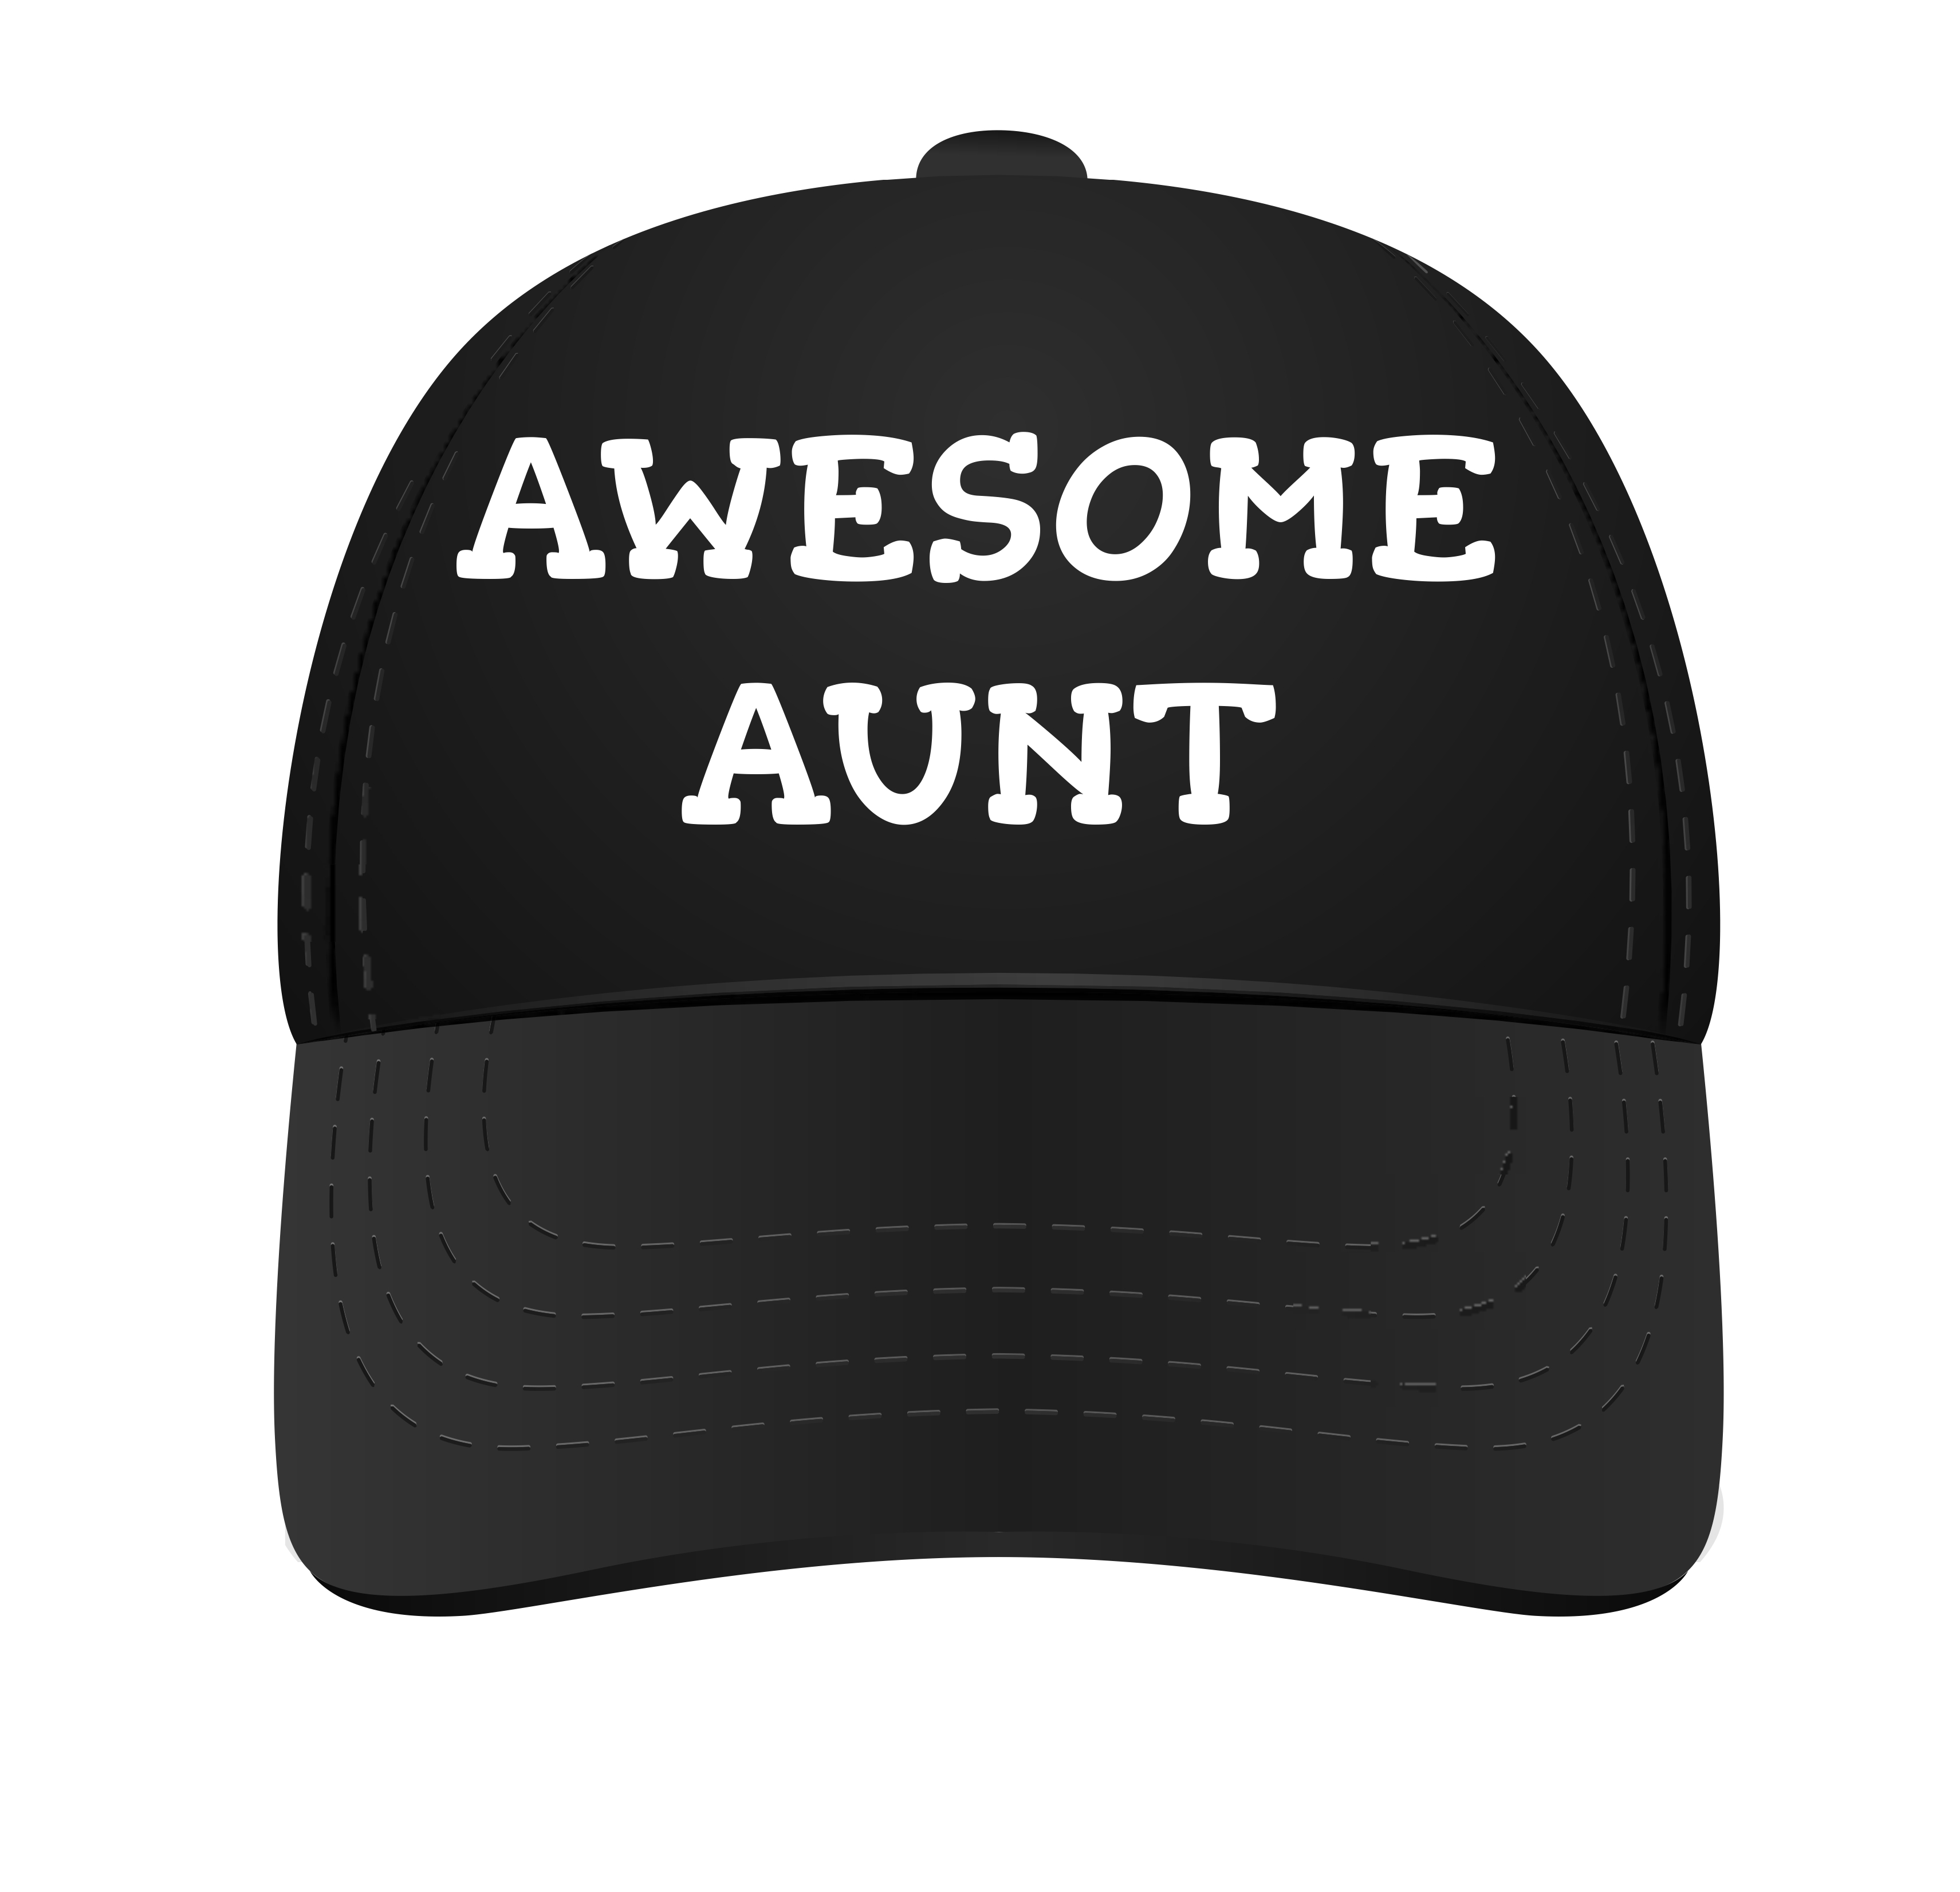 Pet Awesome aunt geweldige tante cap